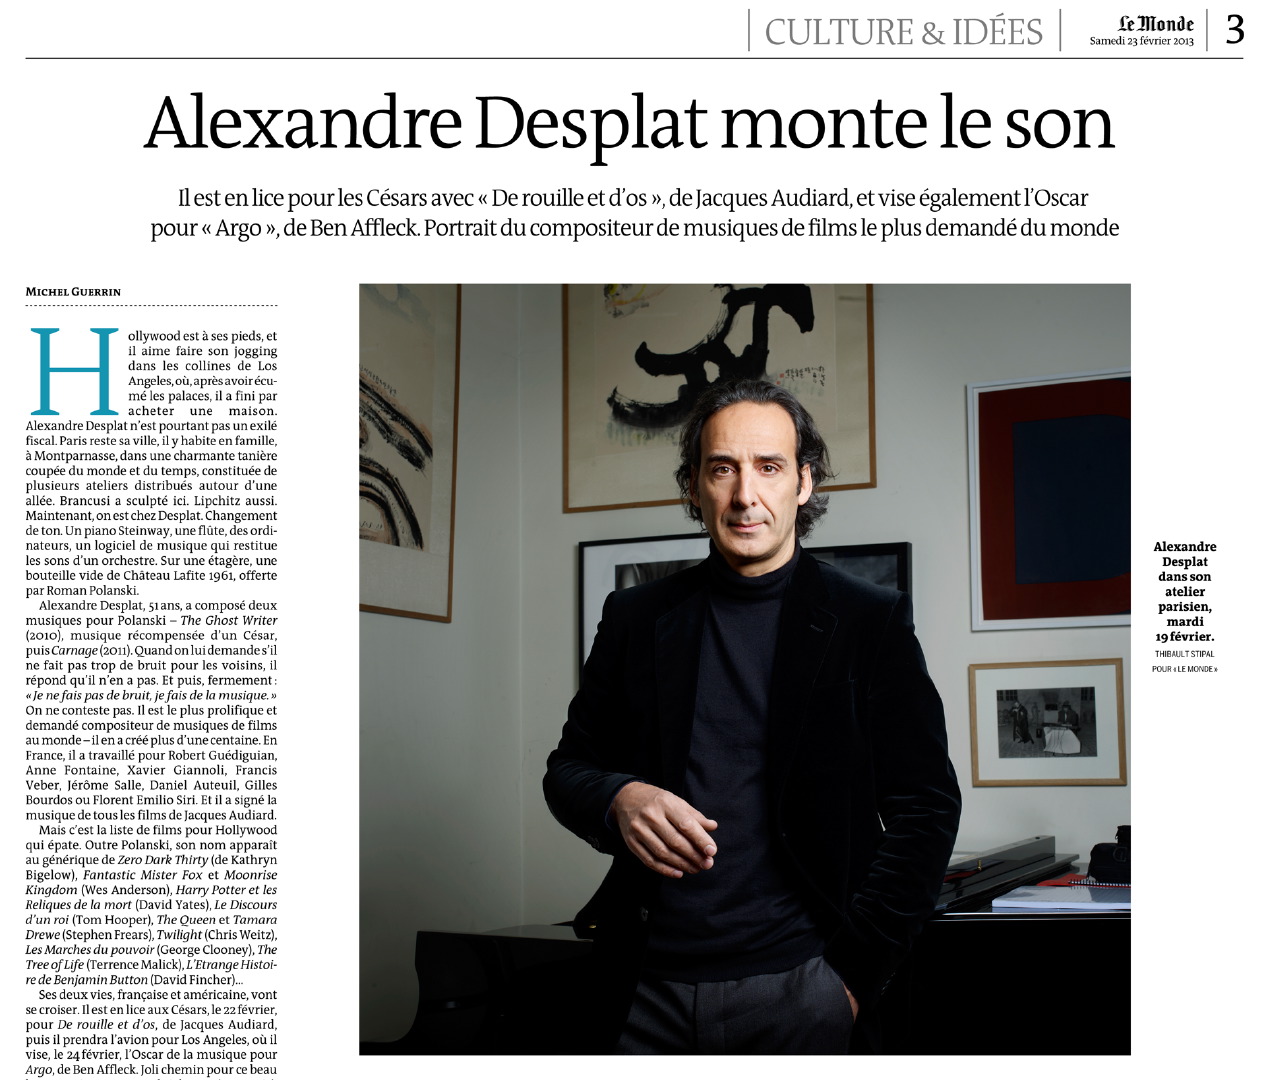 Thibault Stipal - Photographe - Alexandre Desplat / Le Monde - 1